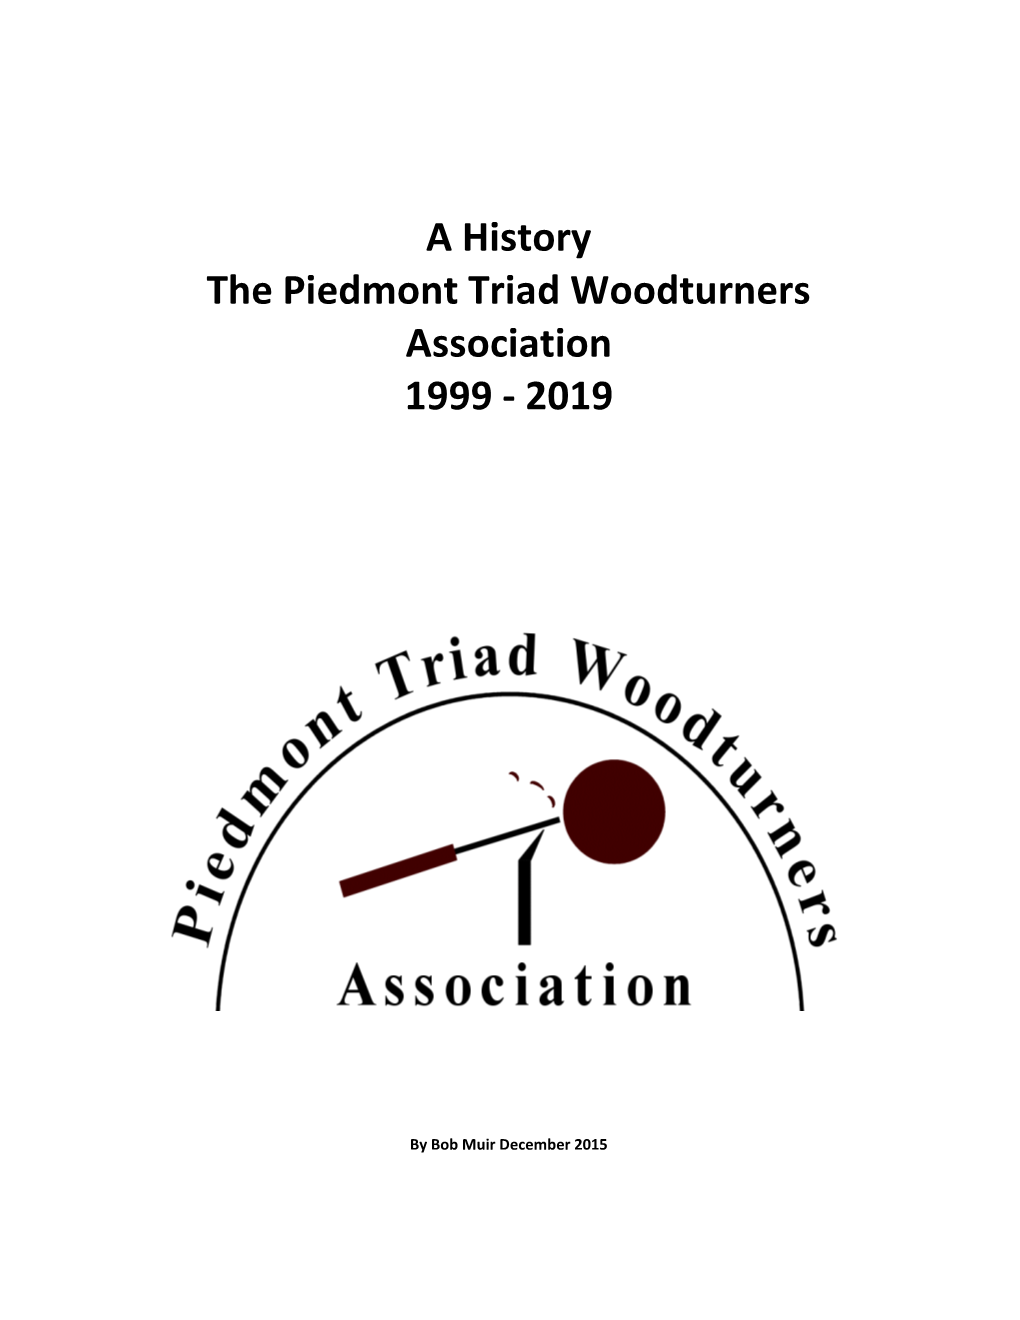 History of Piedmont Triad Woodturners